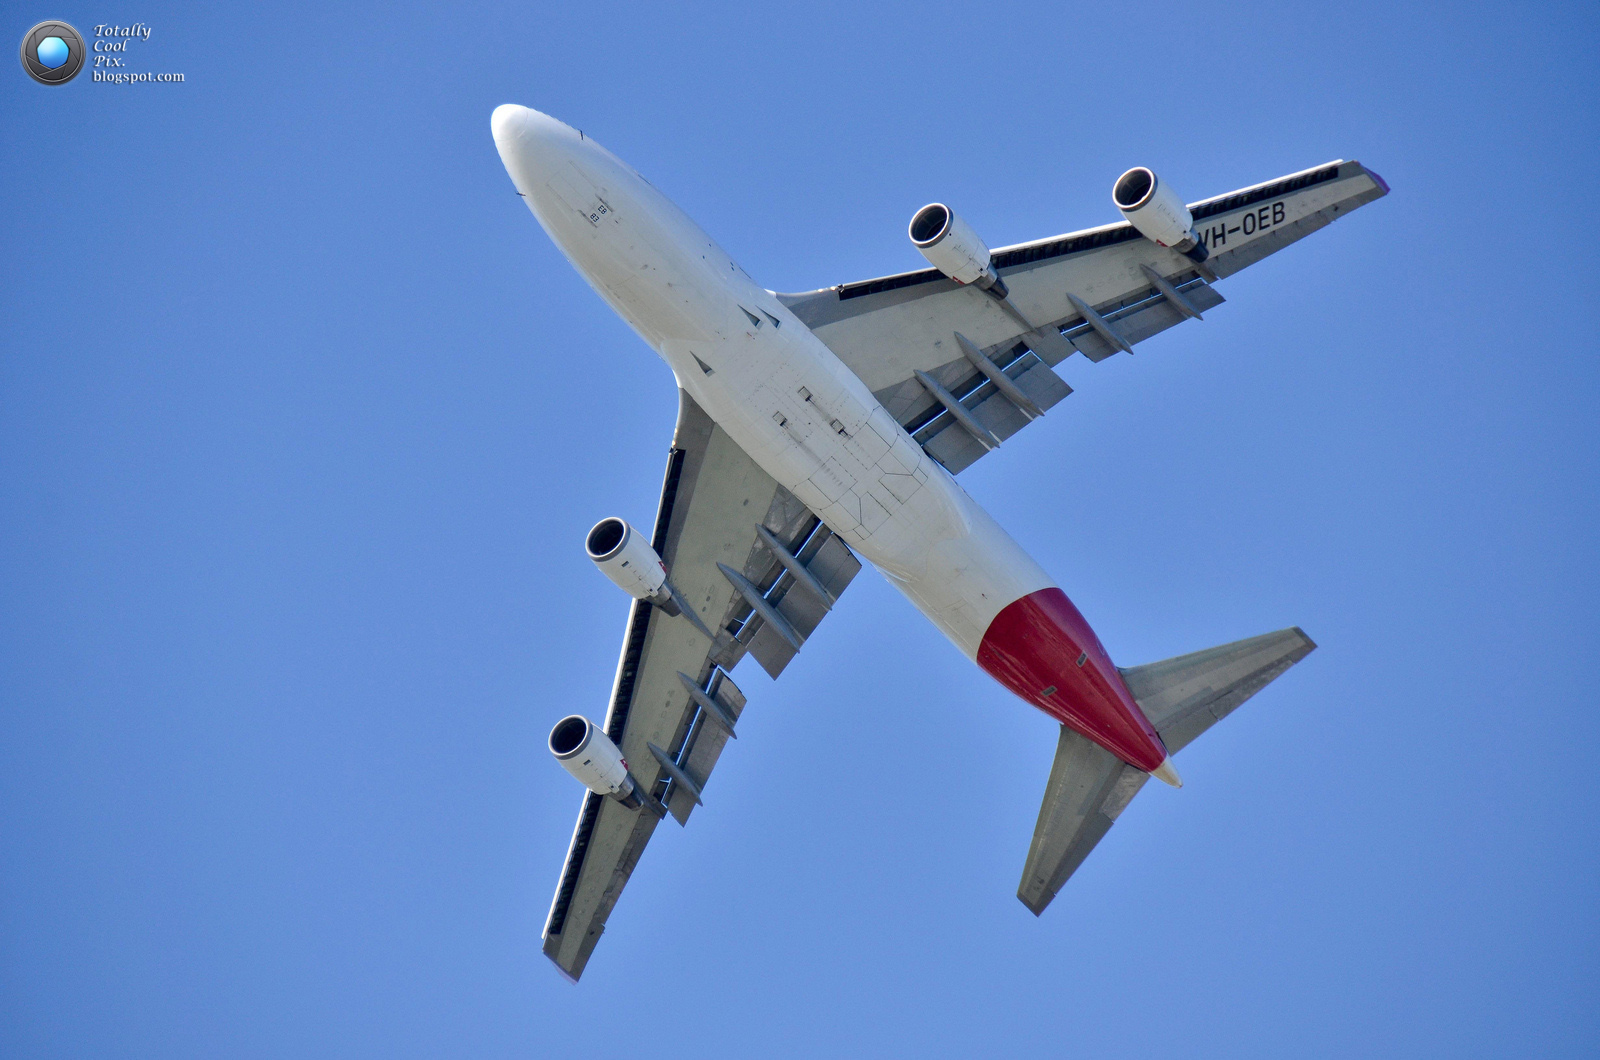 ... -Prix-Airshow-Wallpaper-Keith-McInnes-Photography-QANTAS-747-turn.jpg